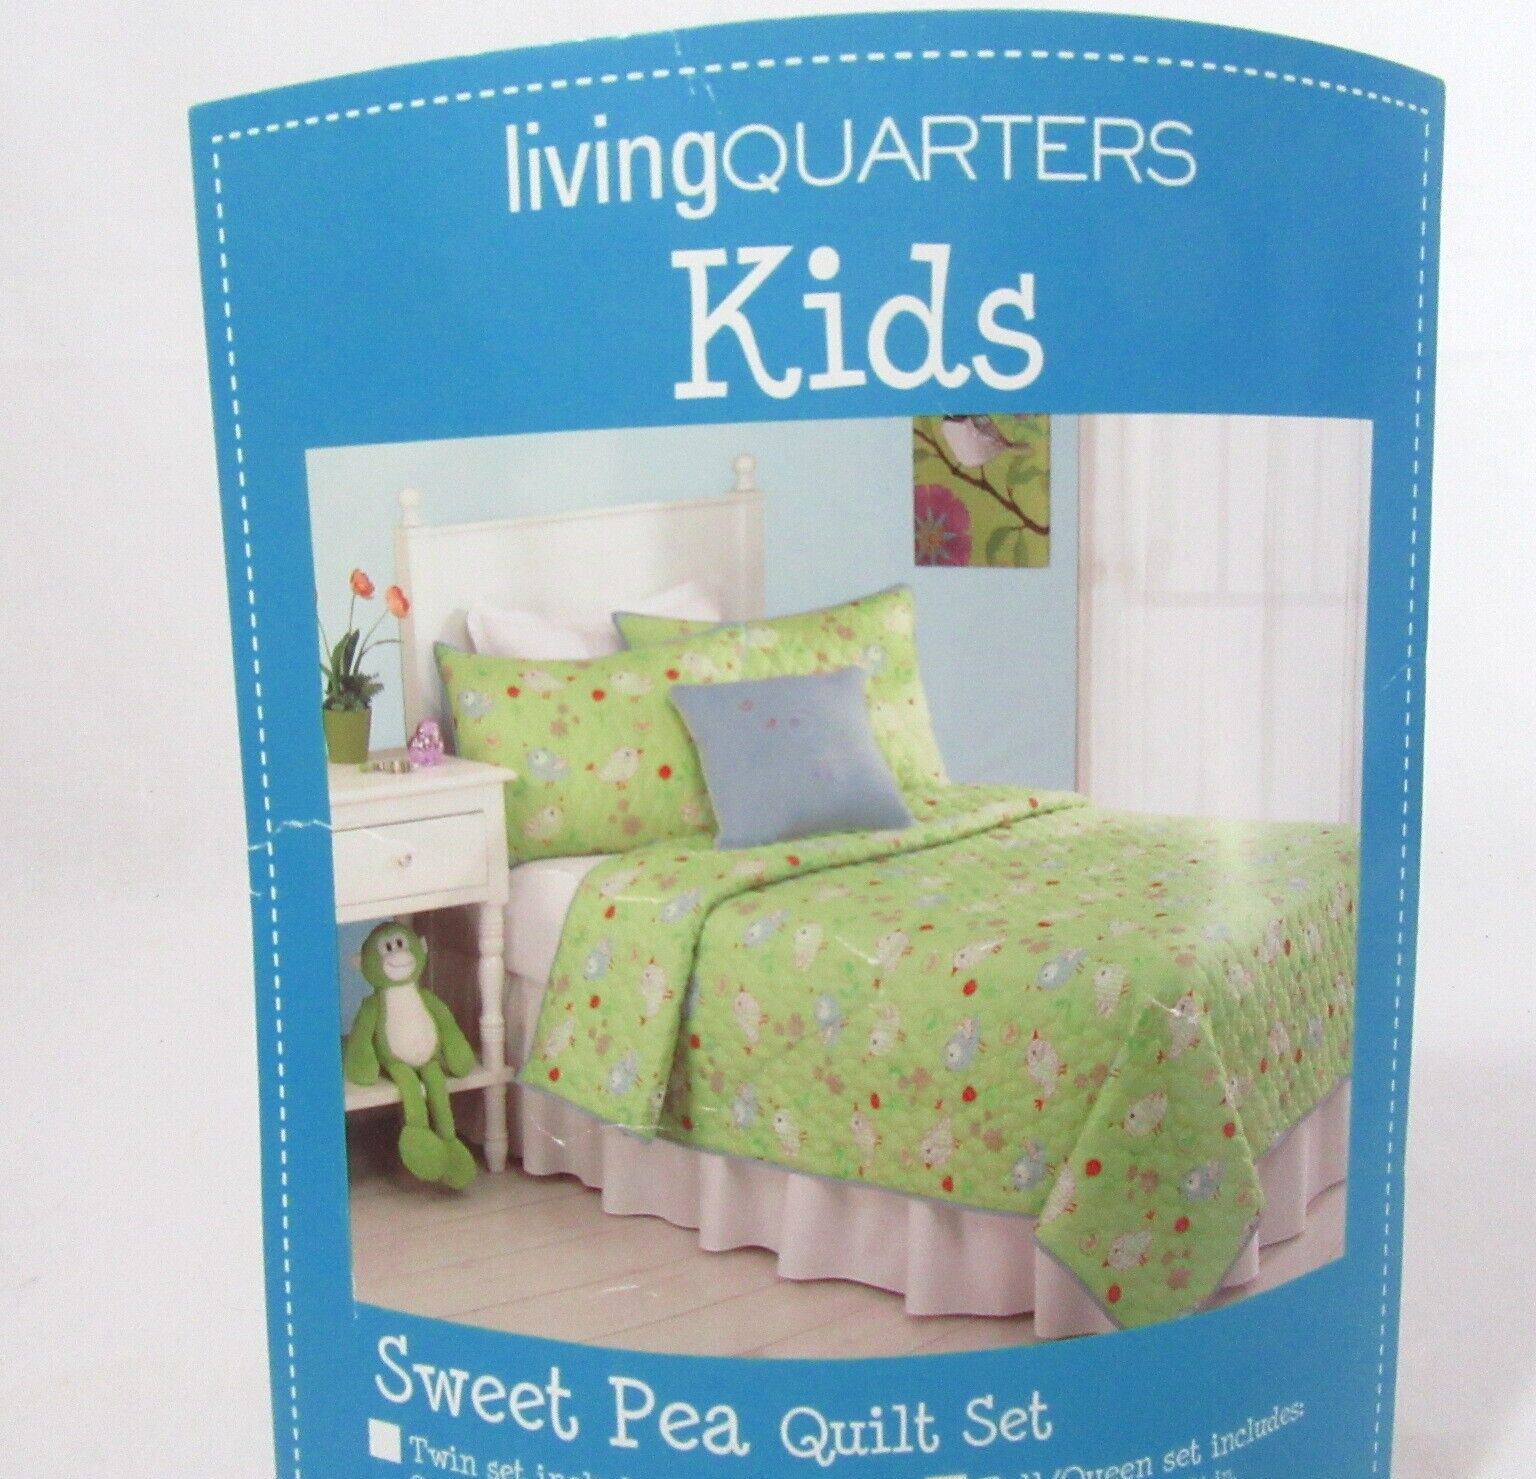 Living Quarters Kids Sweet Pea Birdies 2-PC Twin Quilt Set $130 - $45.00